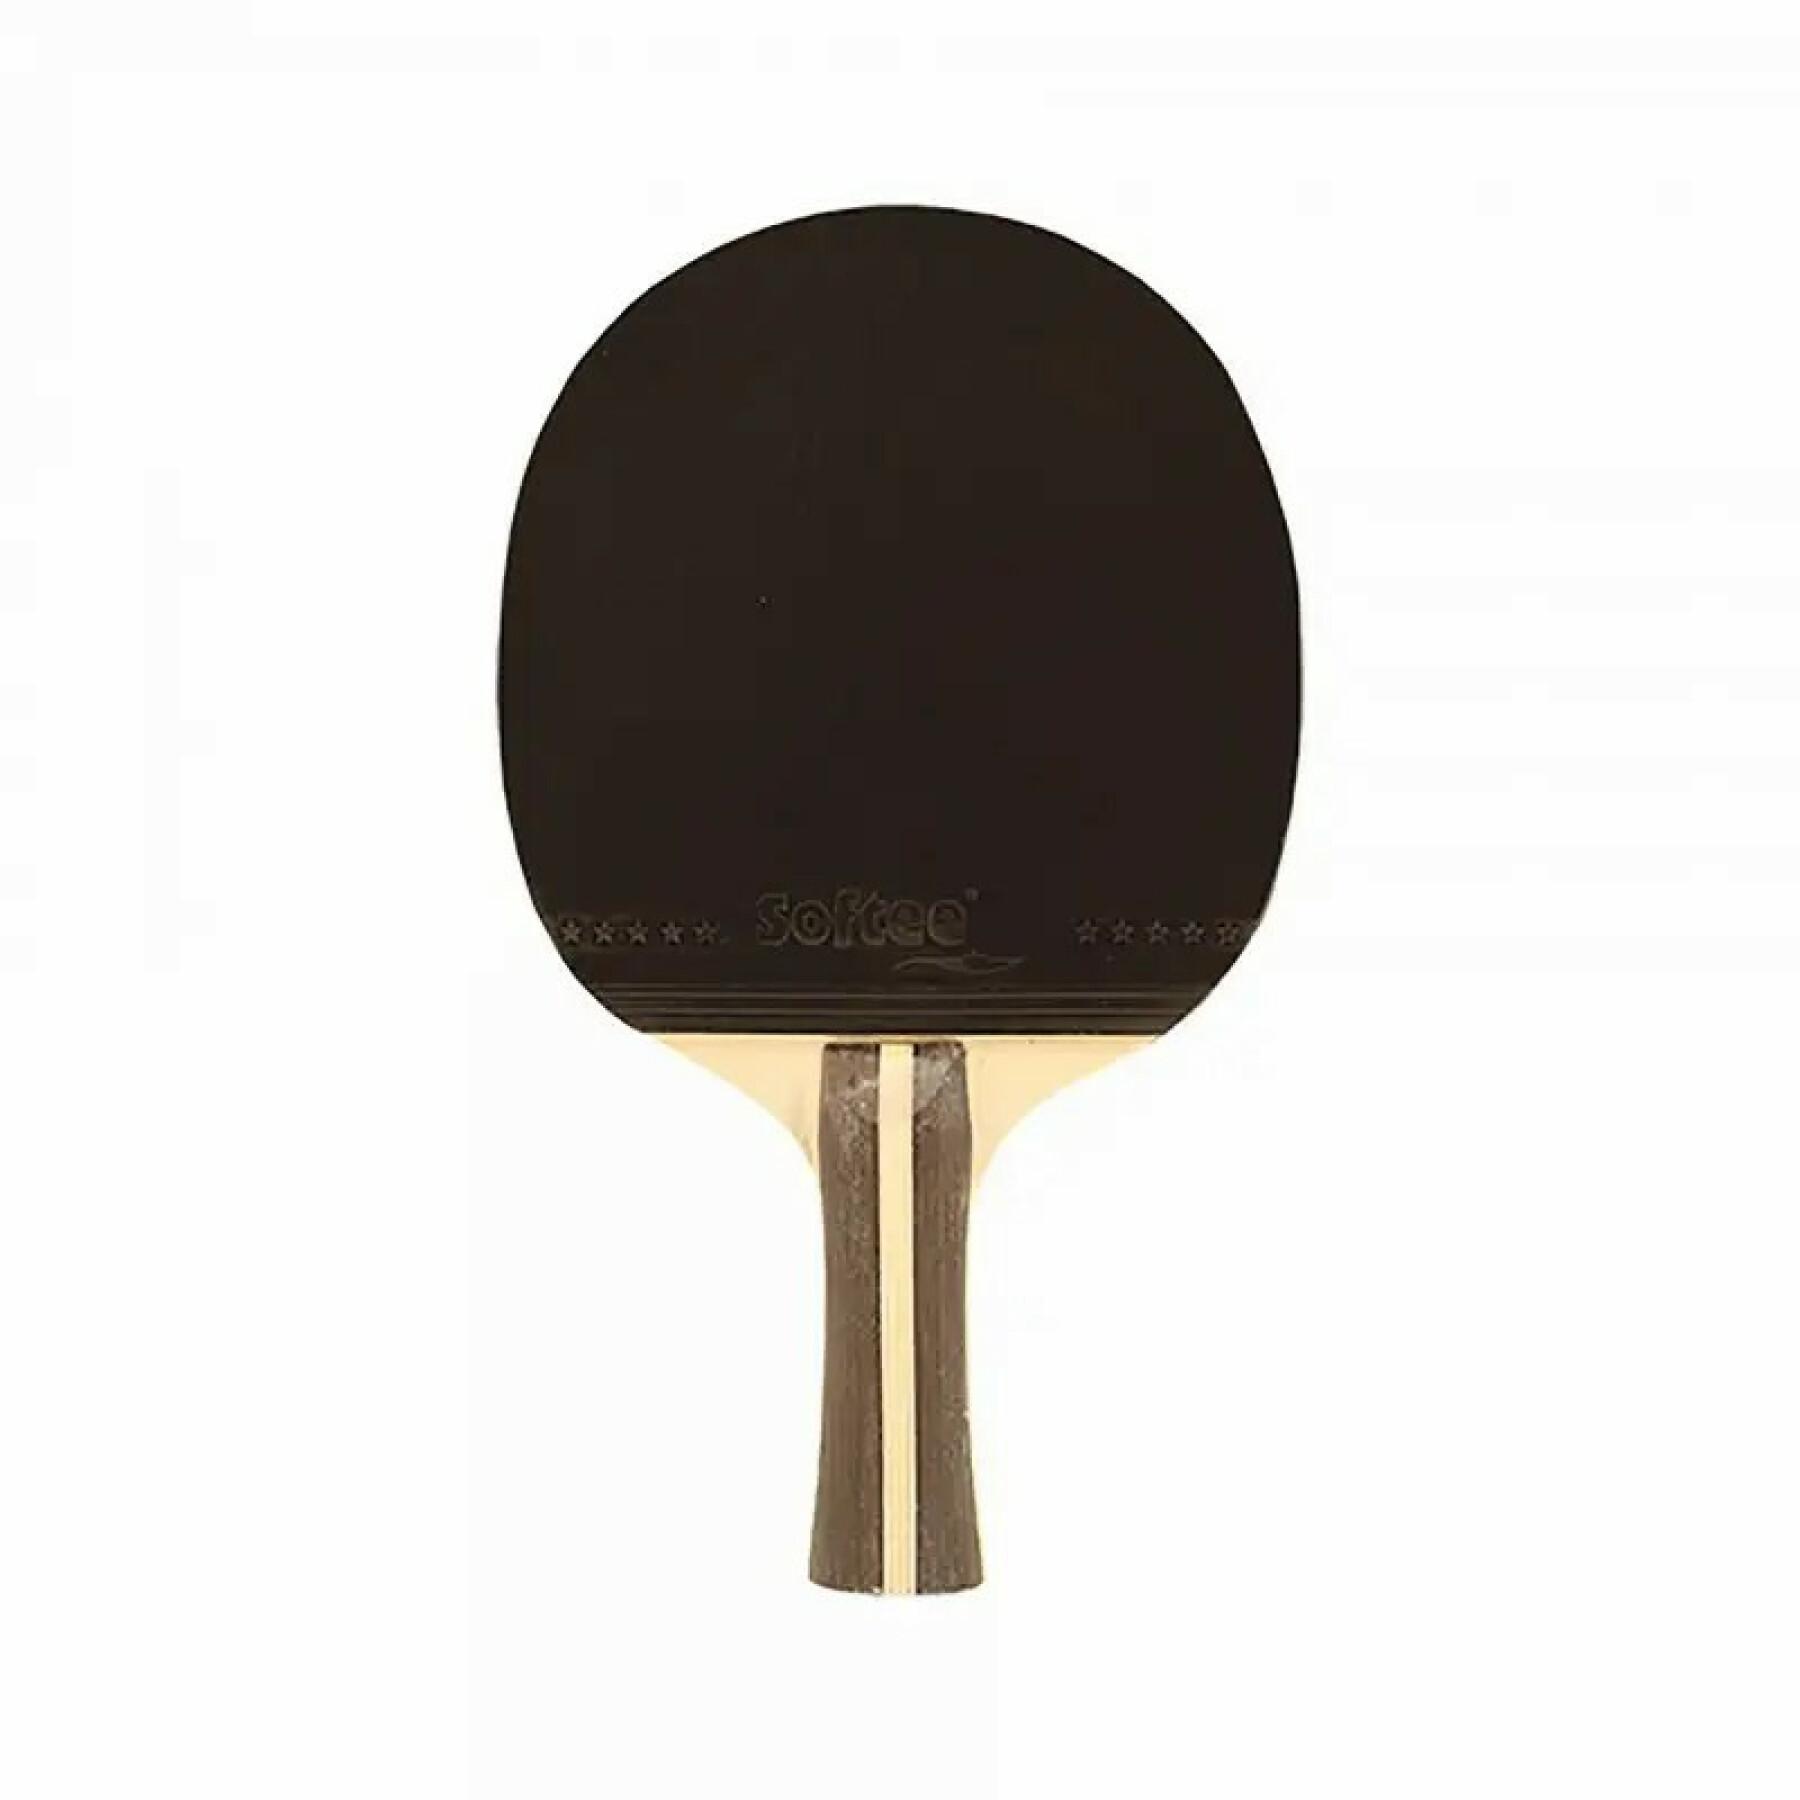 Table tennis racket Softee P700